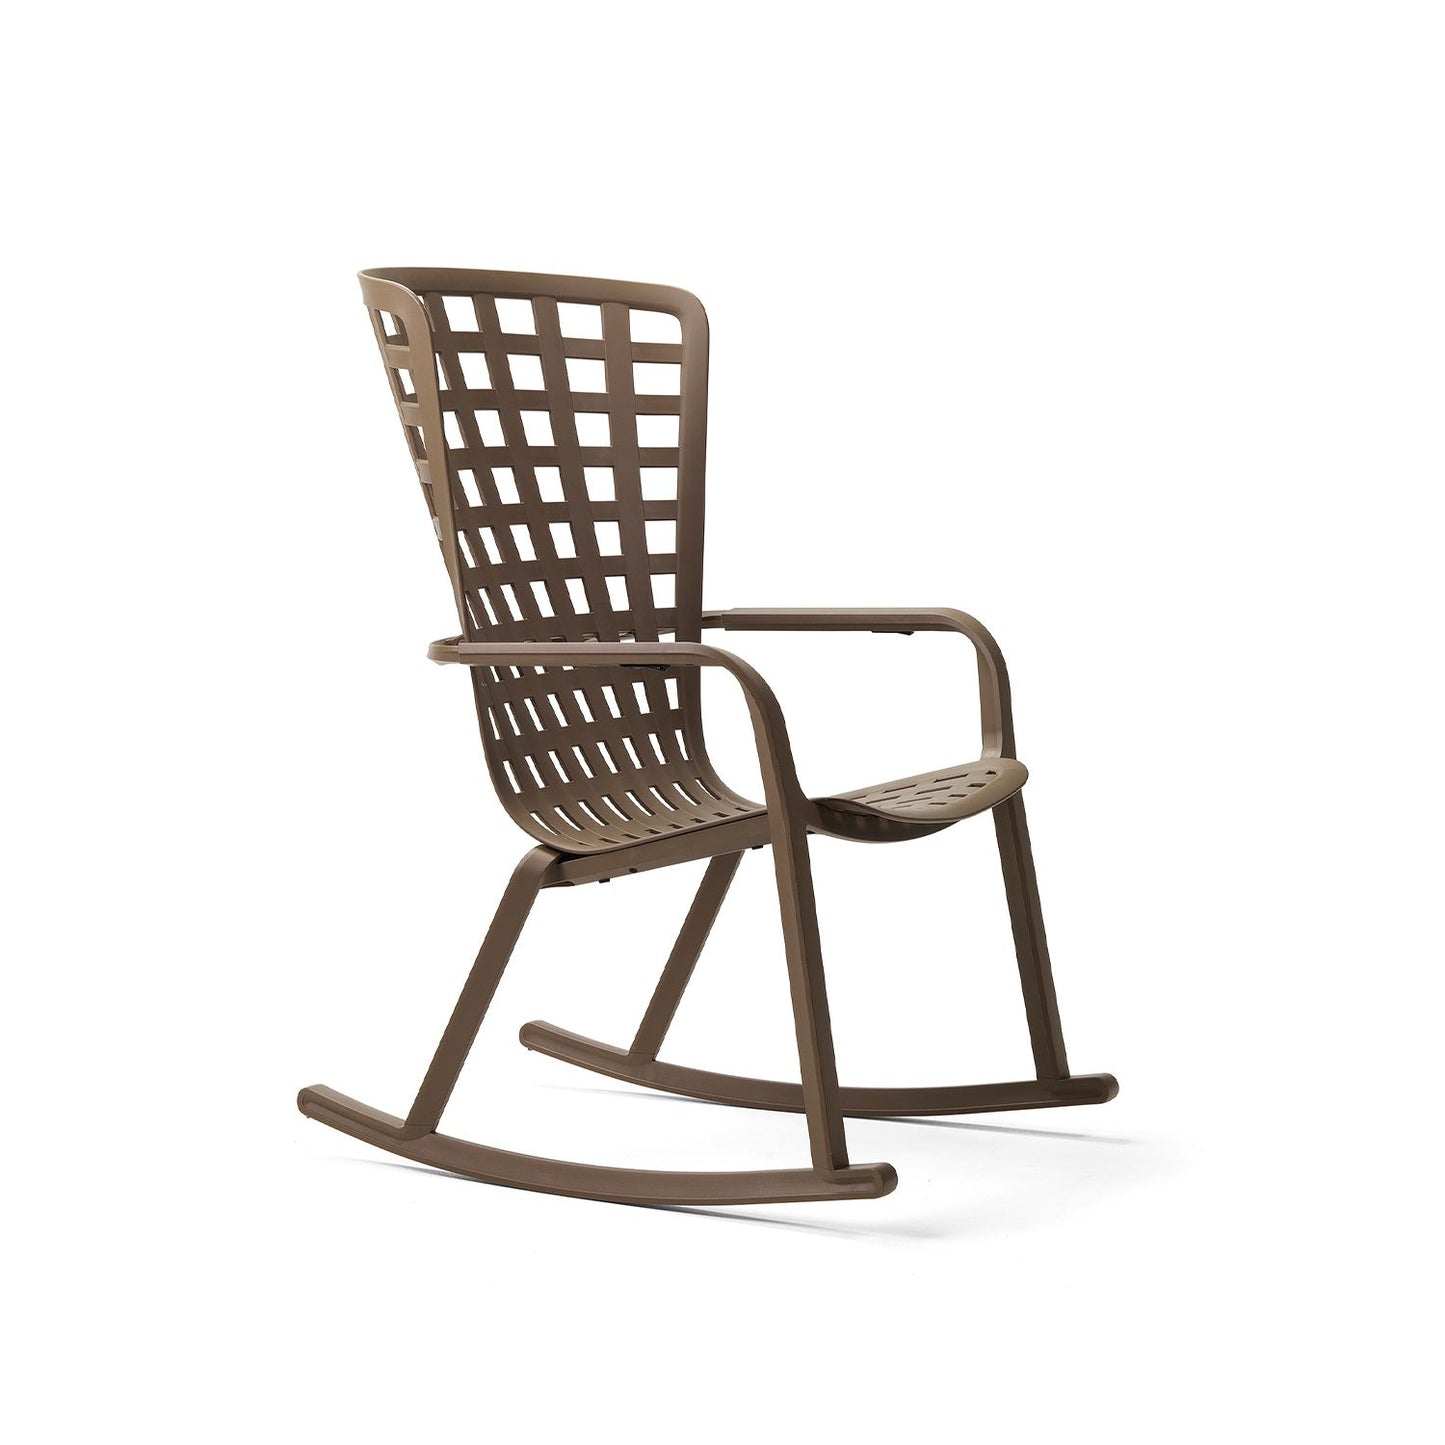 Folio Rocking Chair By Nardi